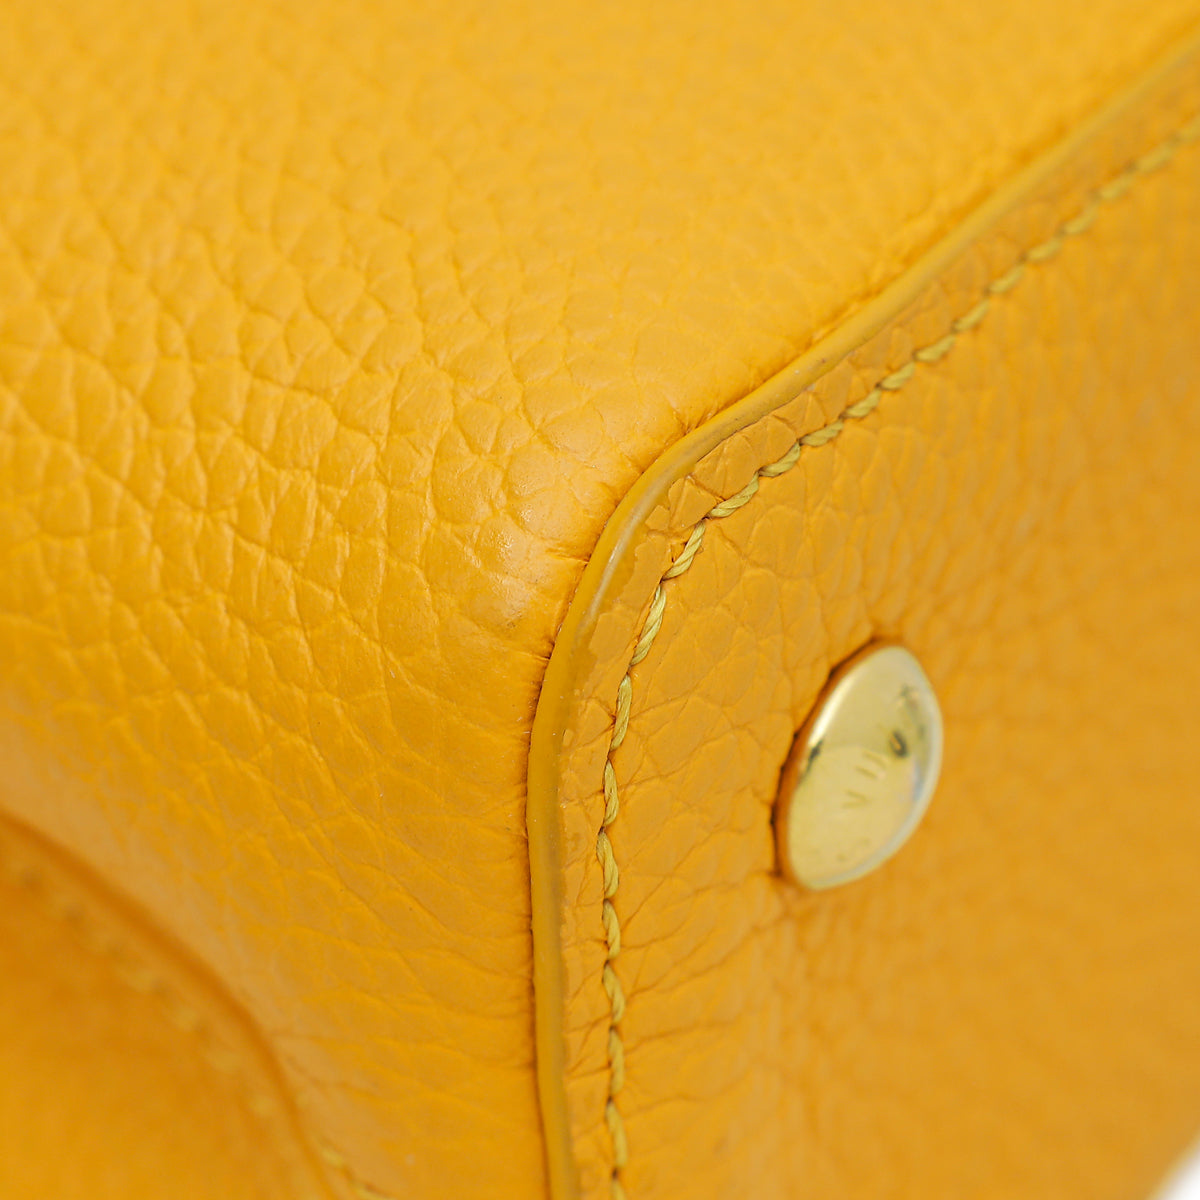 Louis Vuitton Resort 2015 Mini Capucine bag in yellow.